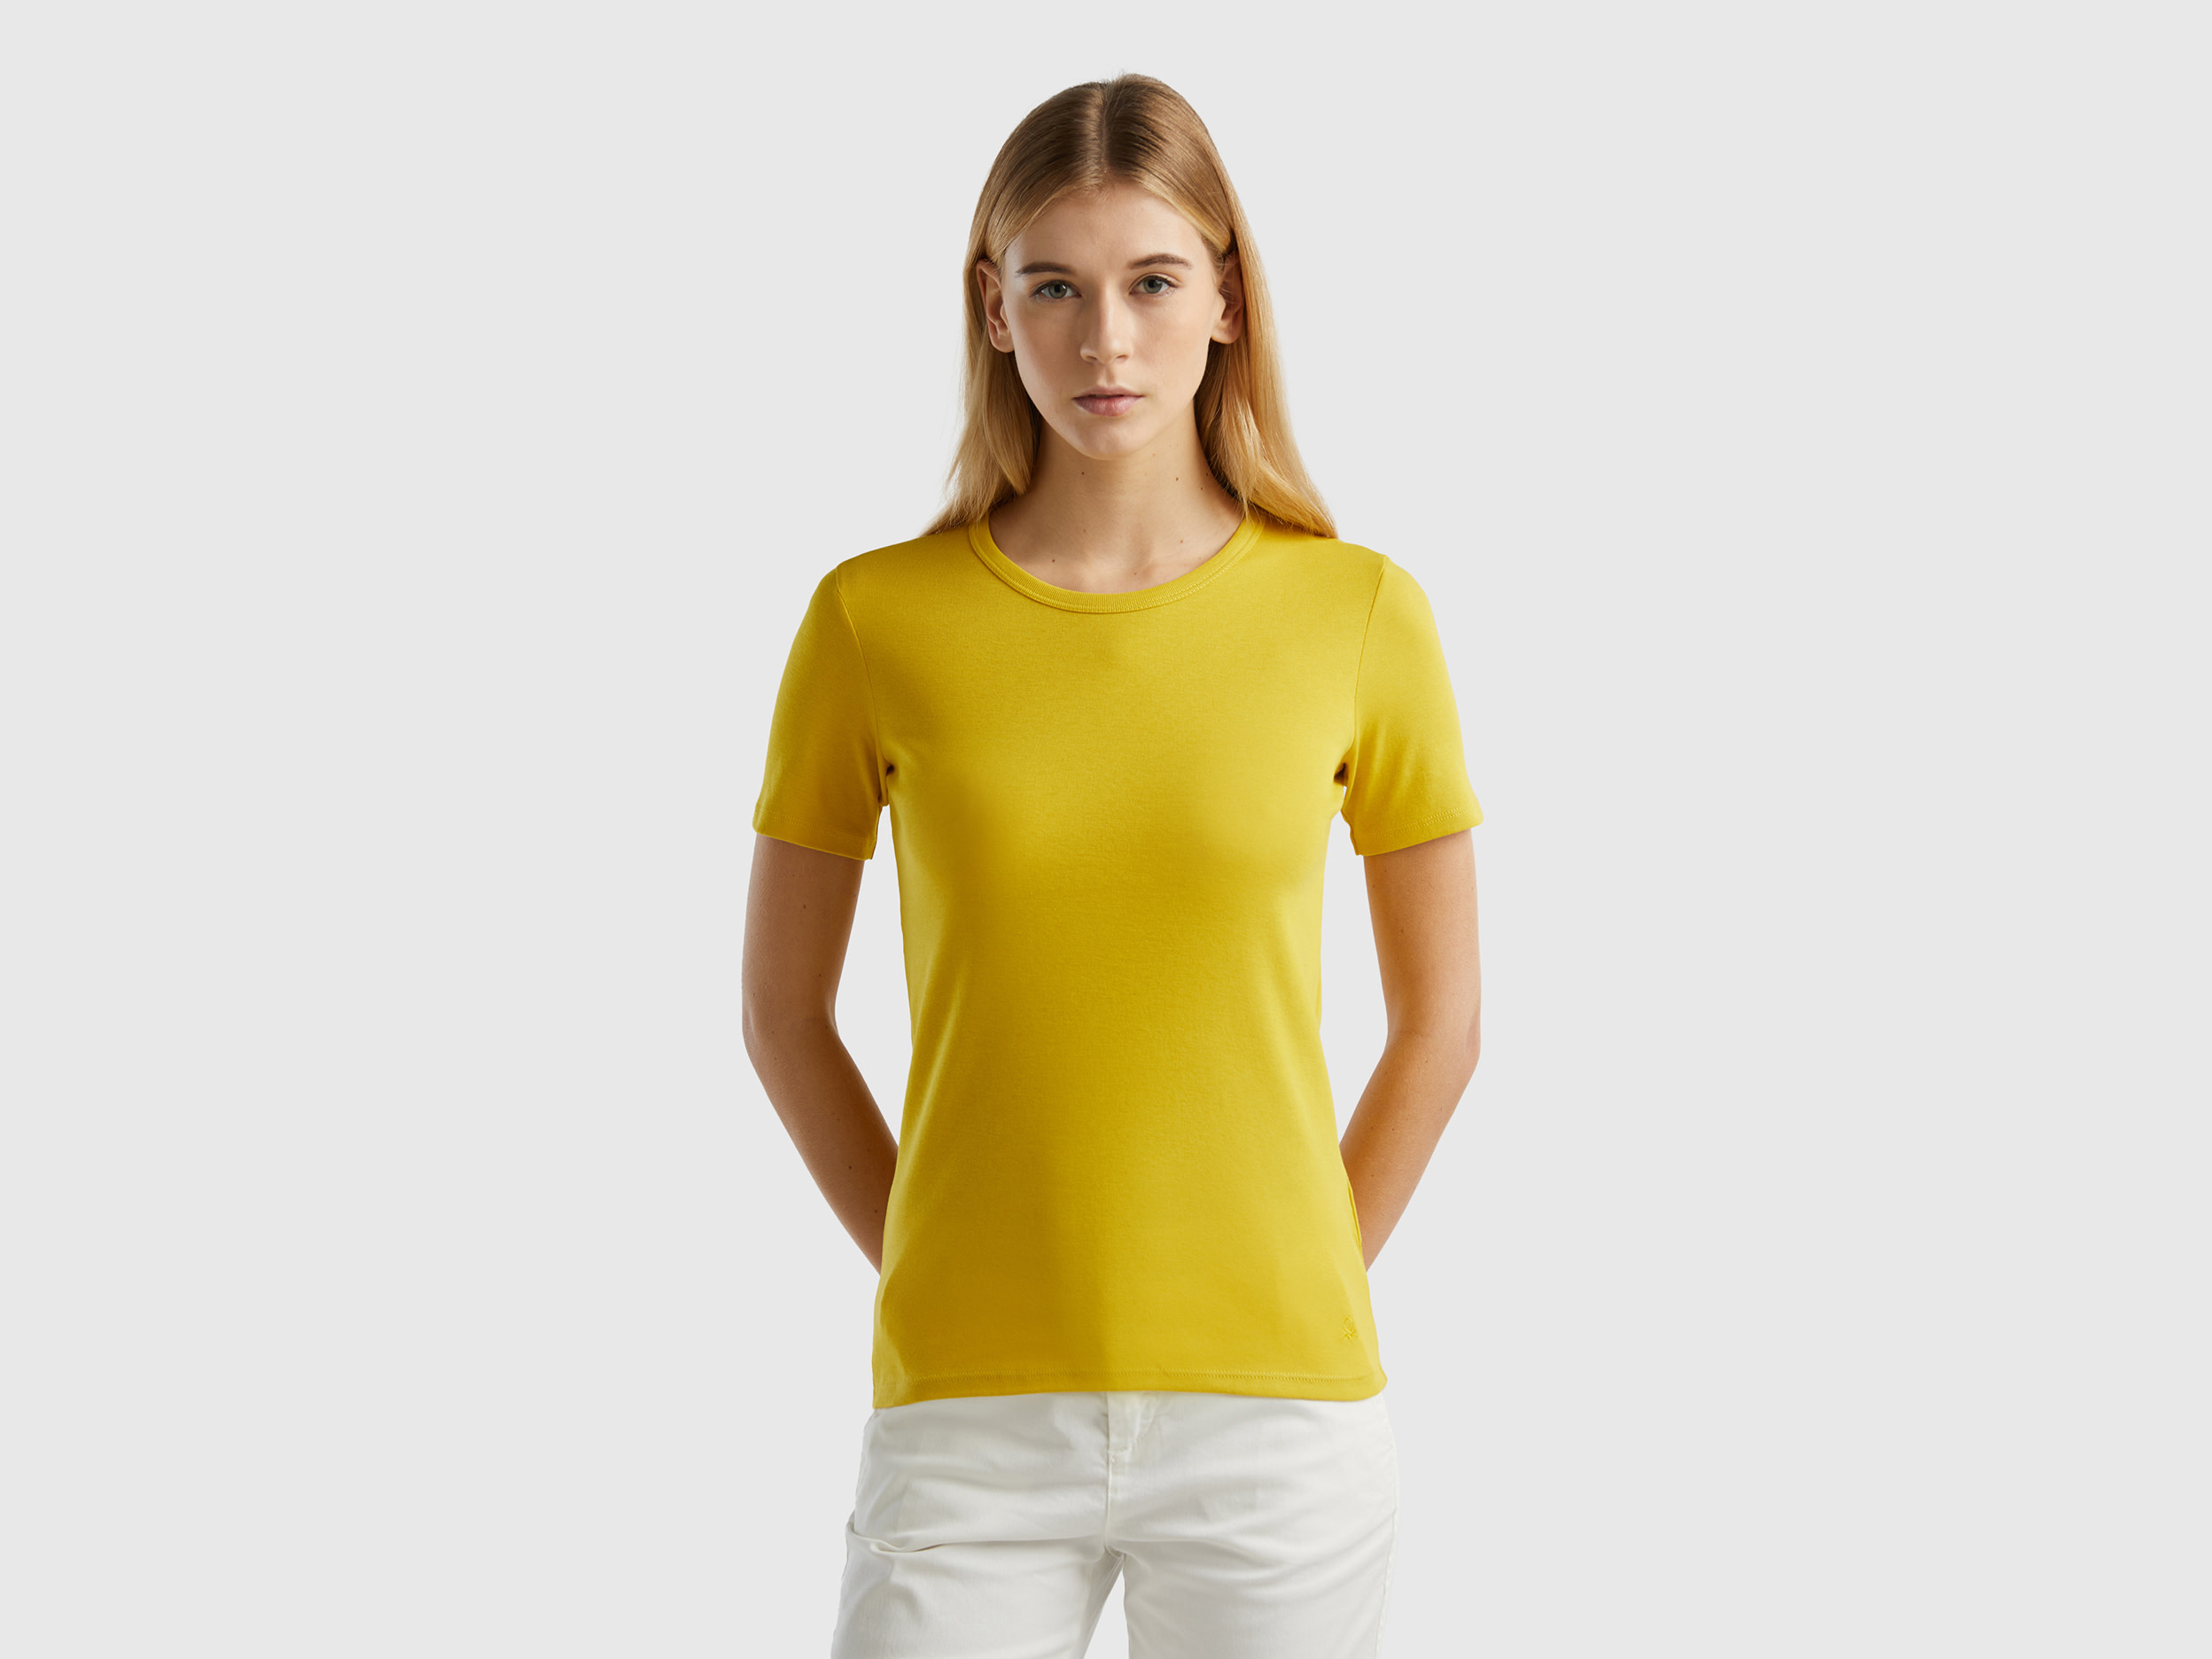 Benetton, Long Fiber Cotton T-shirt, size L, Yellow, Women